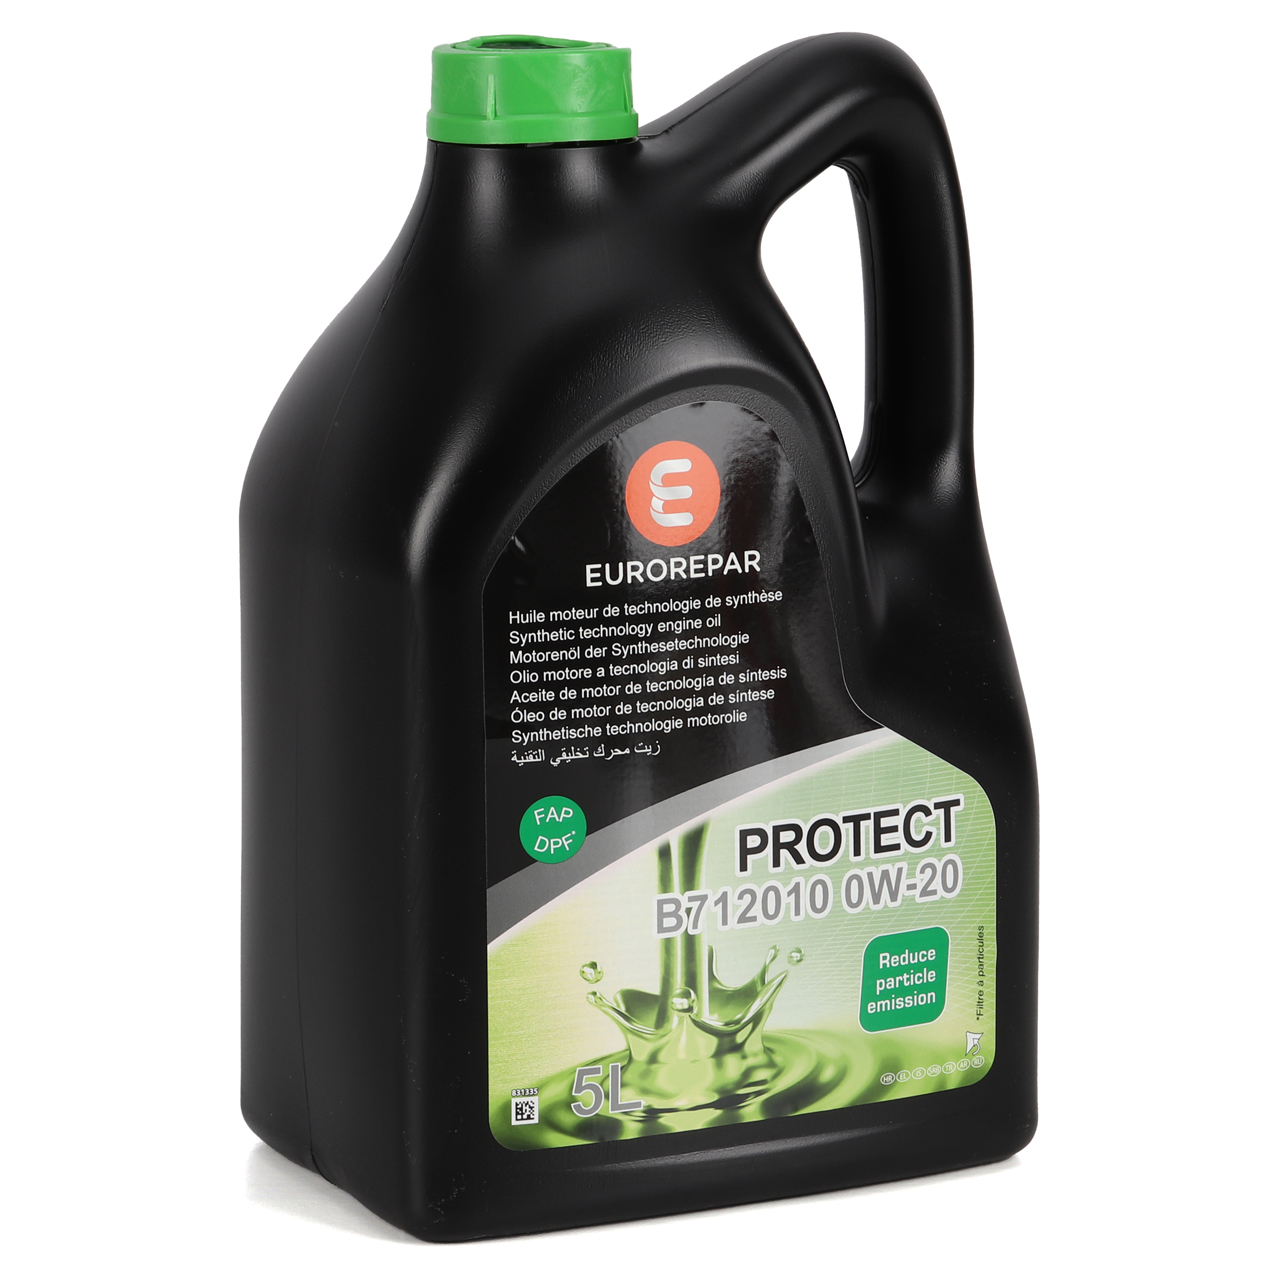 5L 5 Liter EUROREPAR PROTECT 0W-20 Motoröl Öl CITROEN PEUGEOT PSA B71 2010